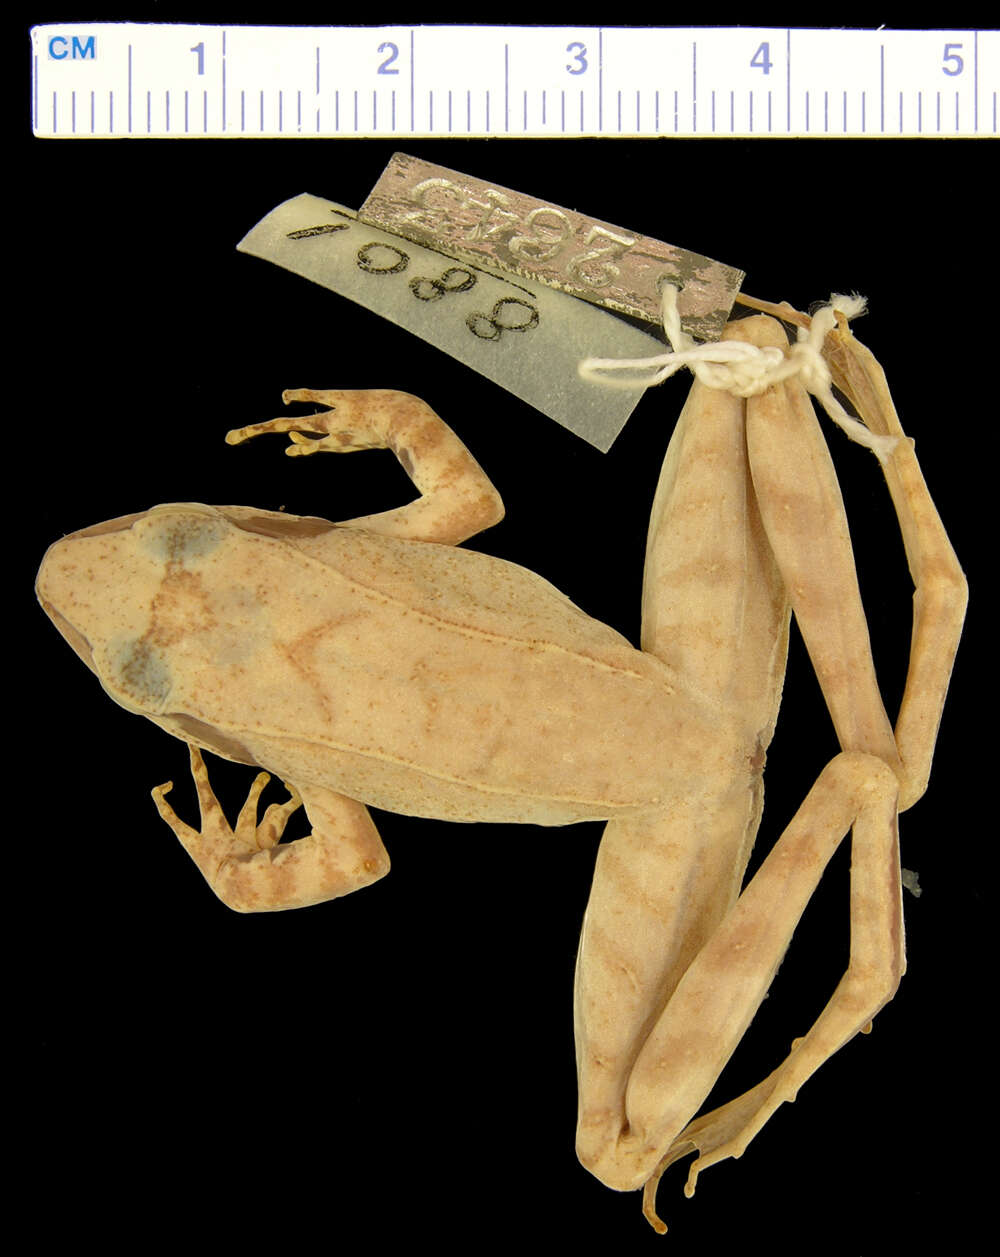 Image of John's Frog